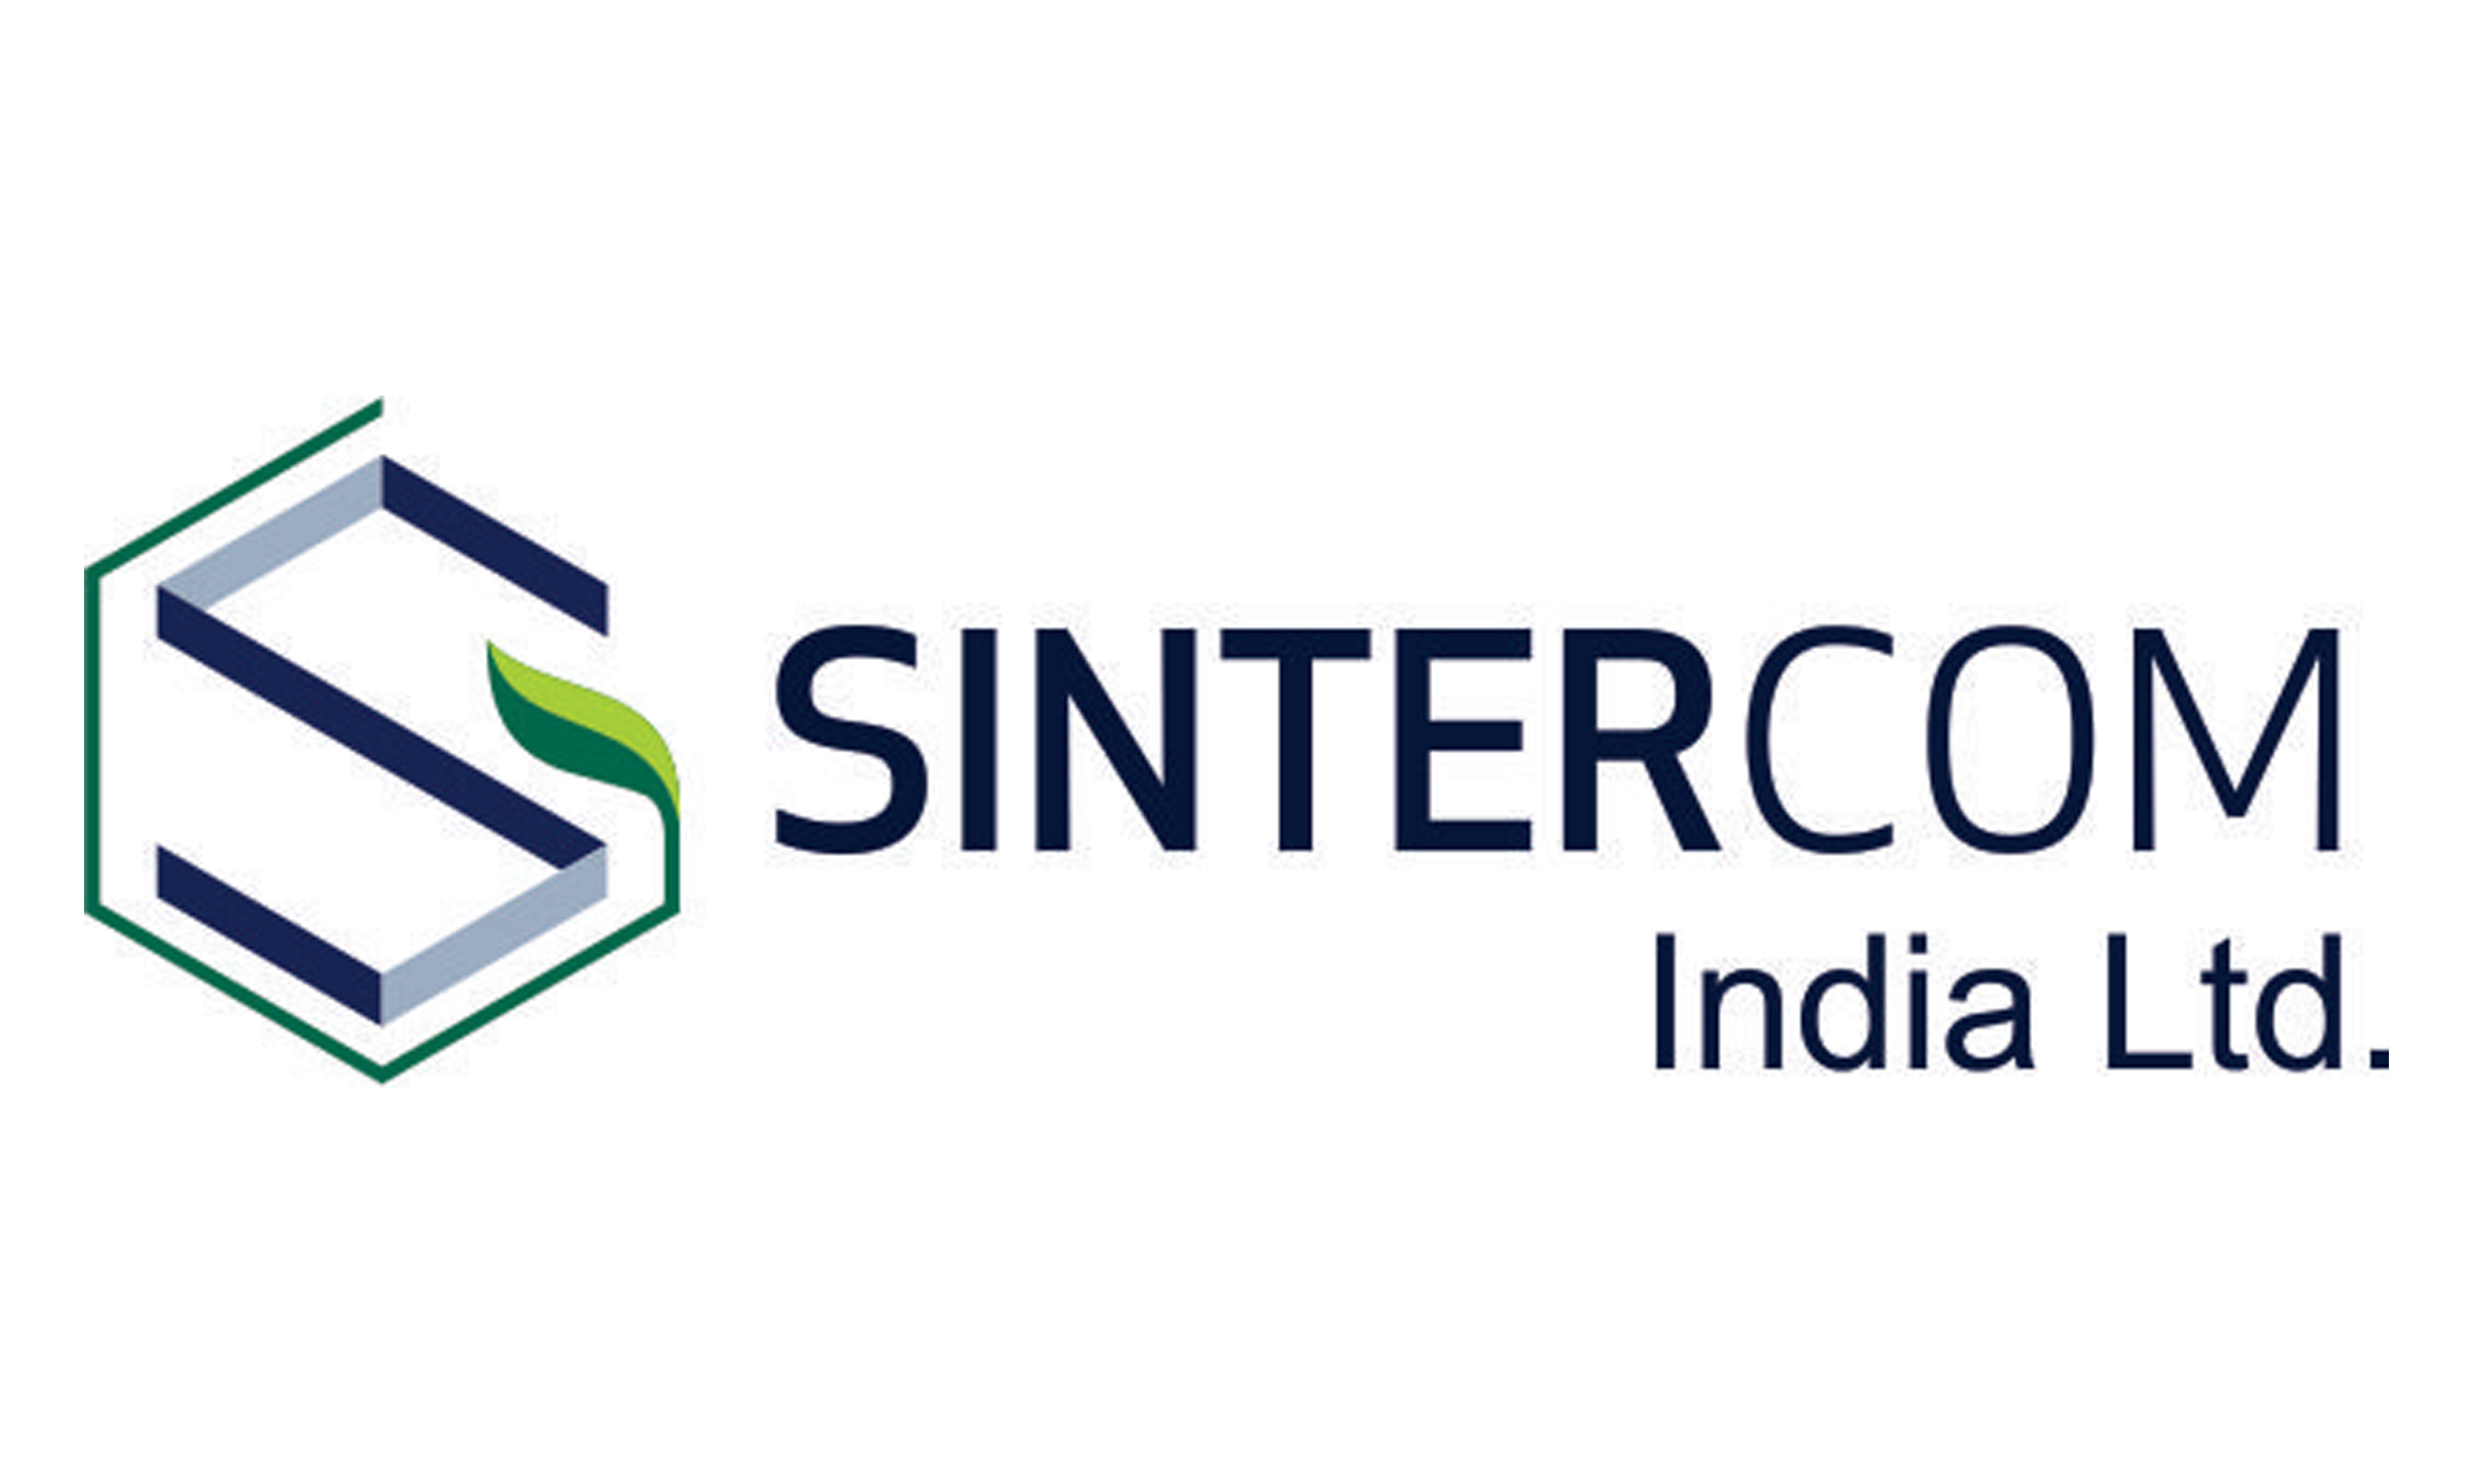 Sintercom India